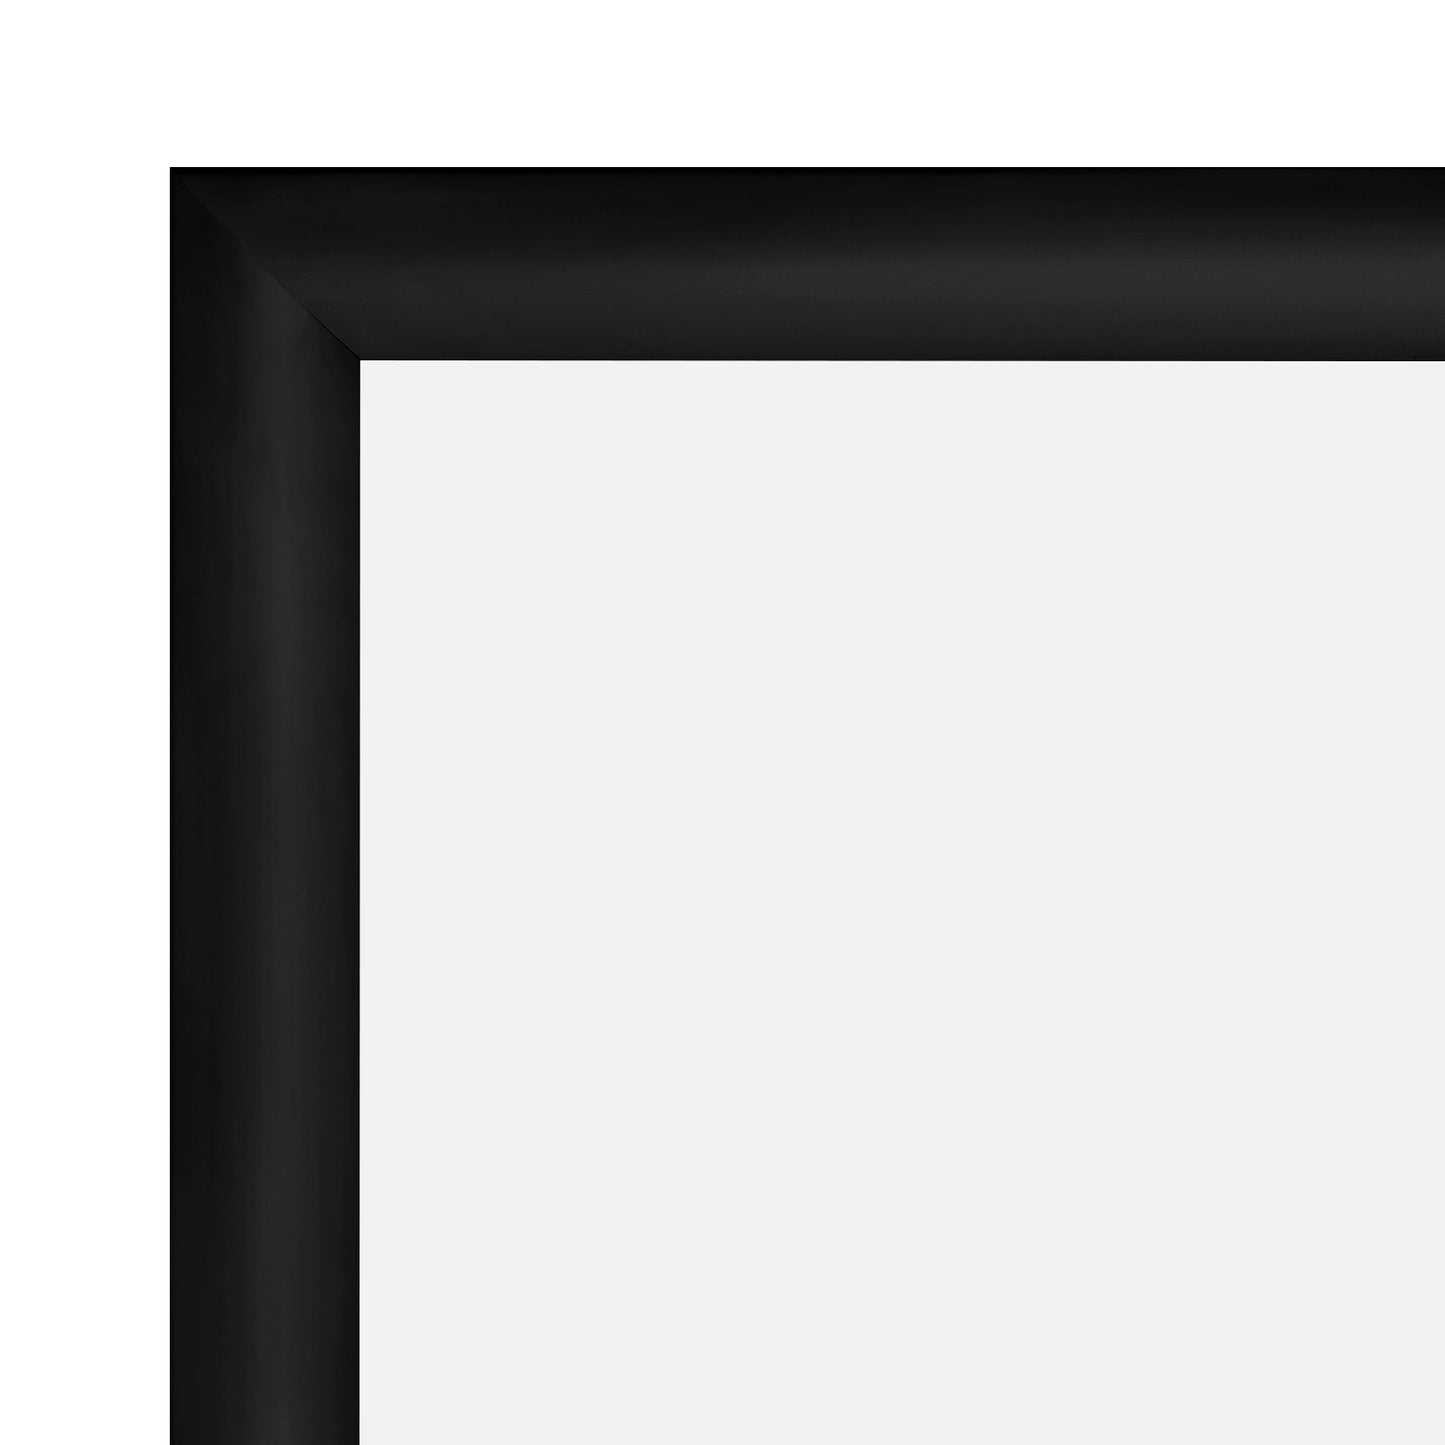 8x24 Black SnapeZo® Snap Frame - 1.2" Profile